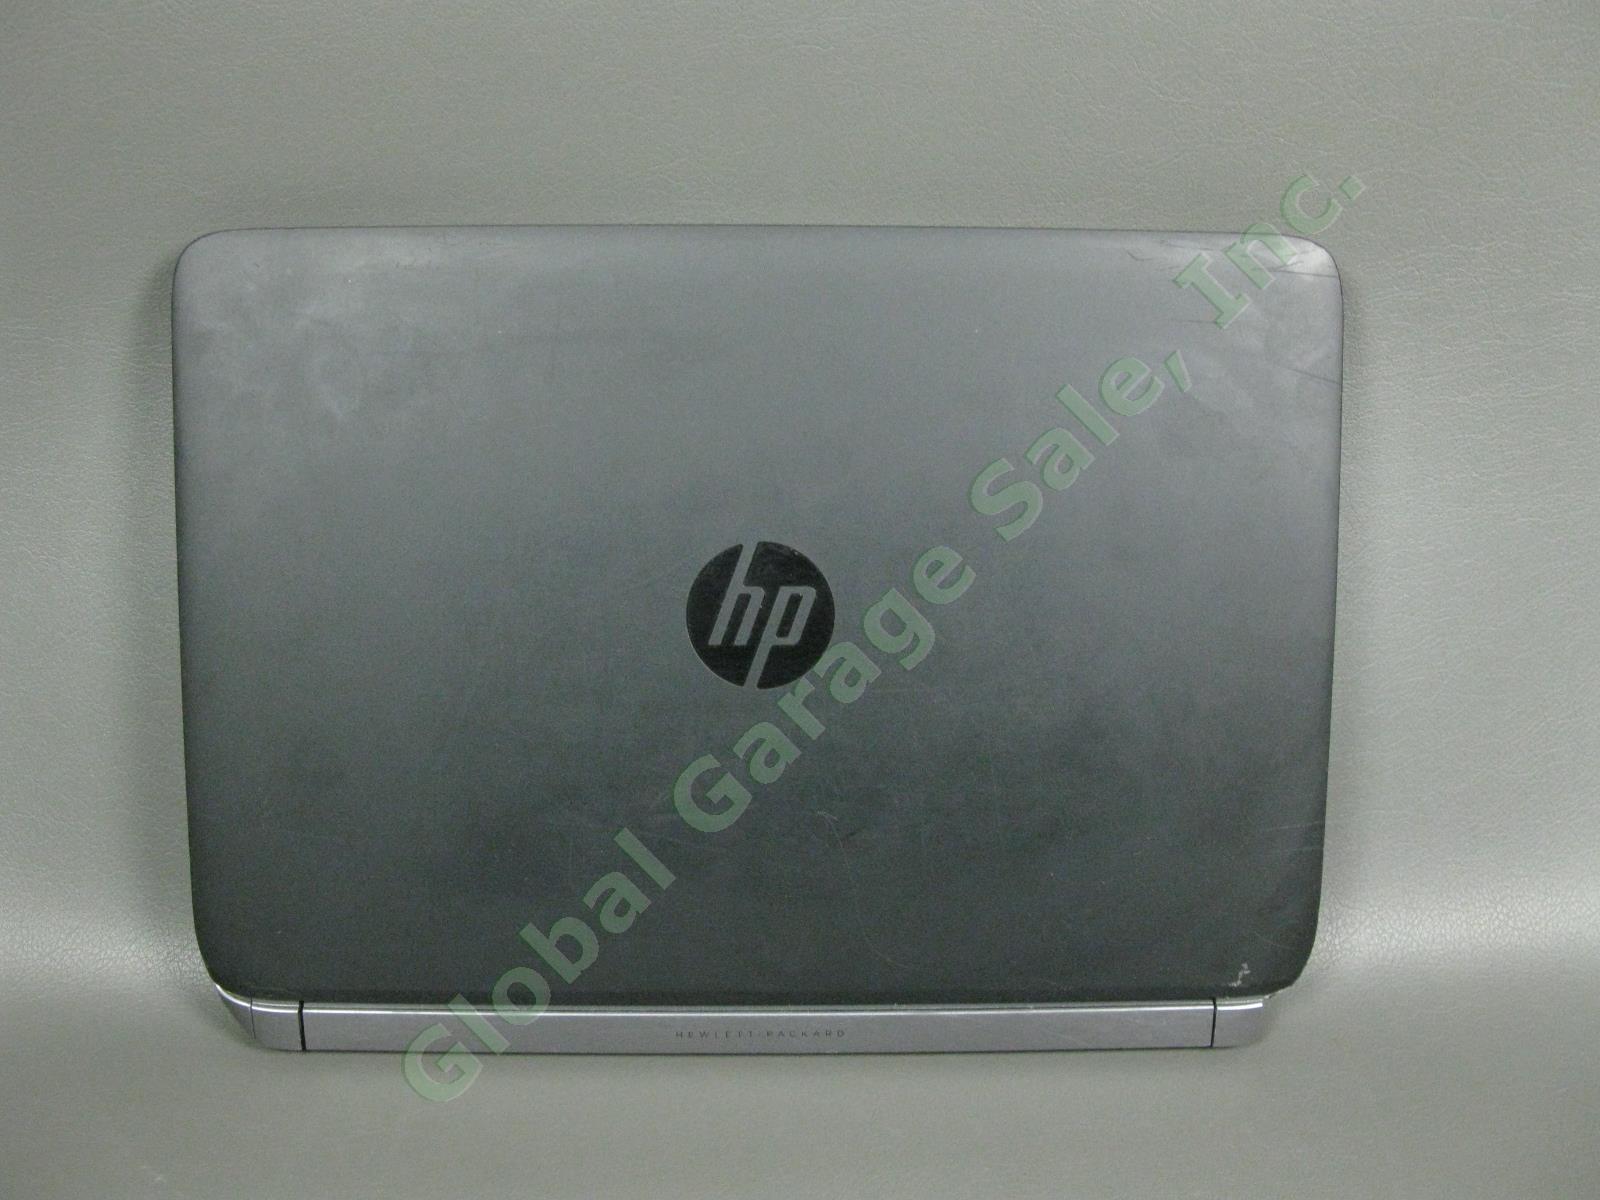 HP ProBook Black Laptop 440 G2 i5-5200U 2.20GHz 4GB RAM 460GB HD Windows 10 Pro 3